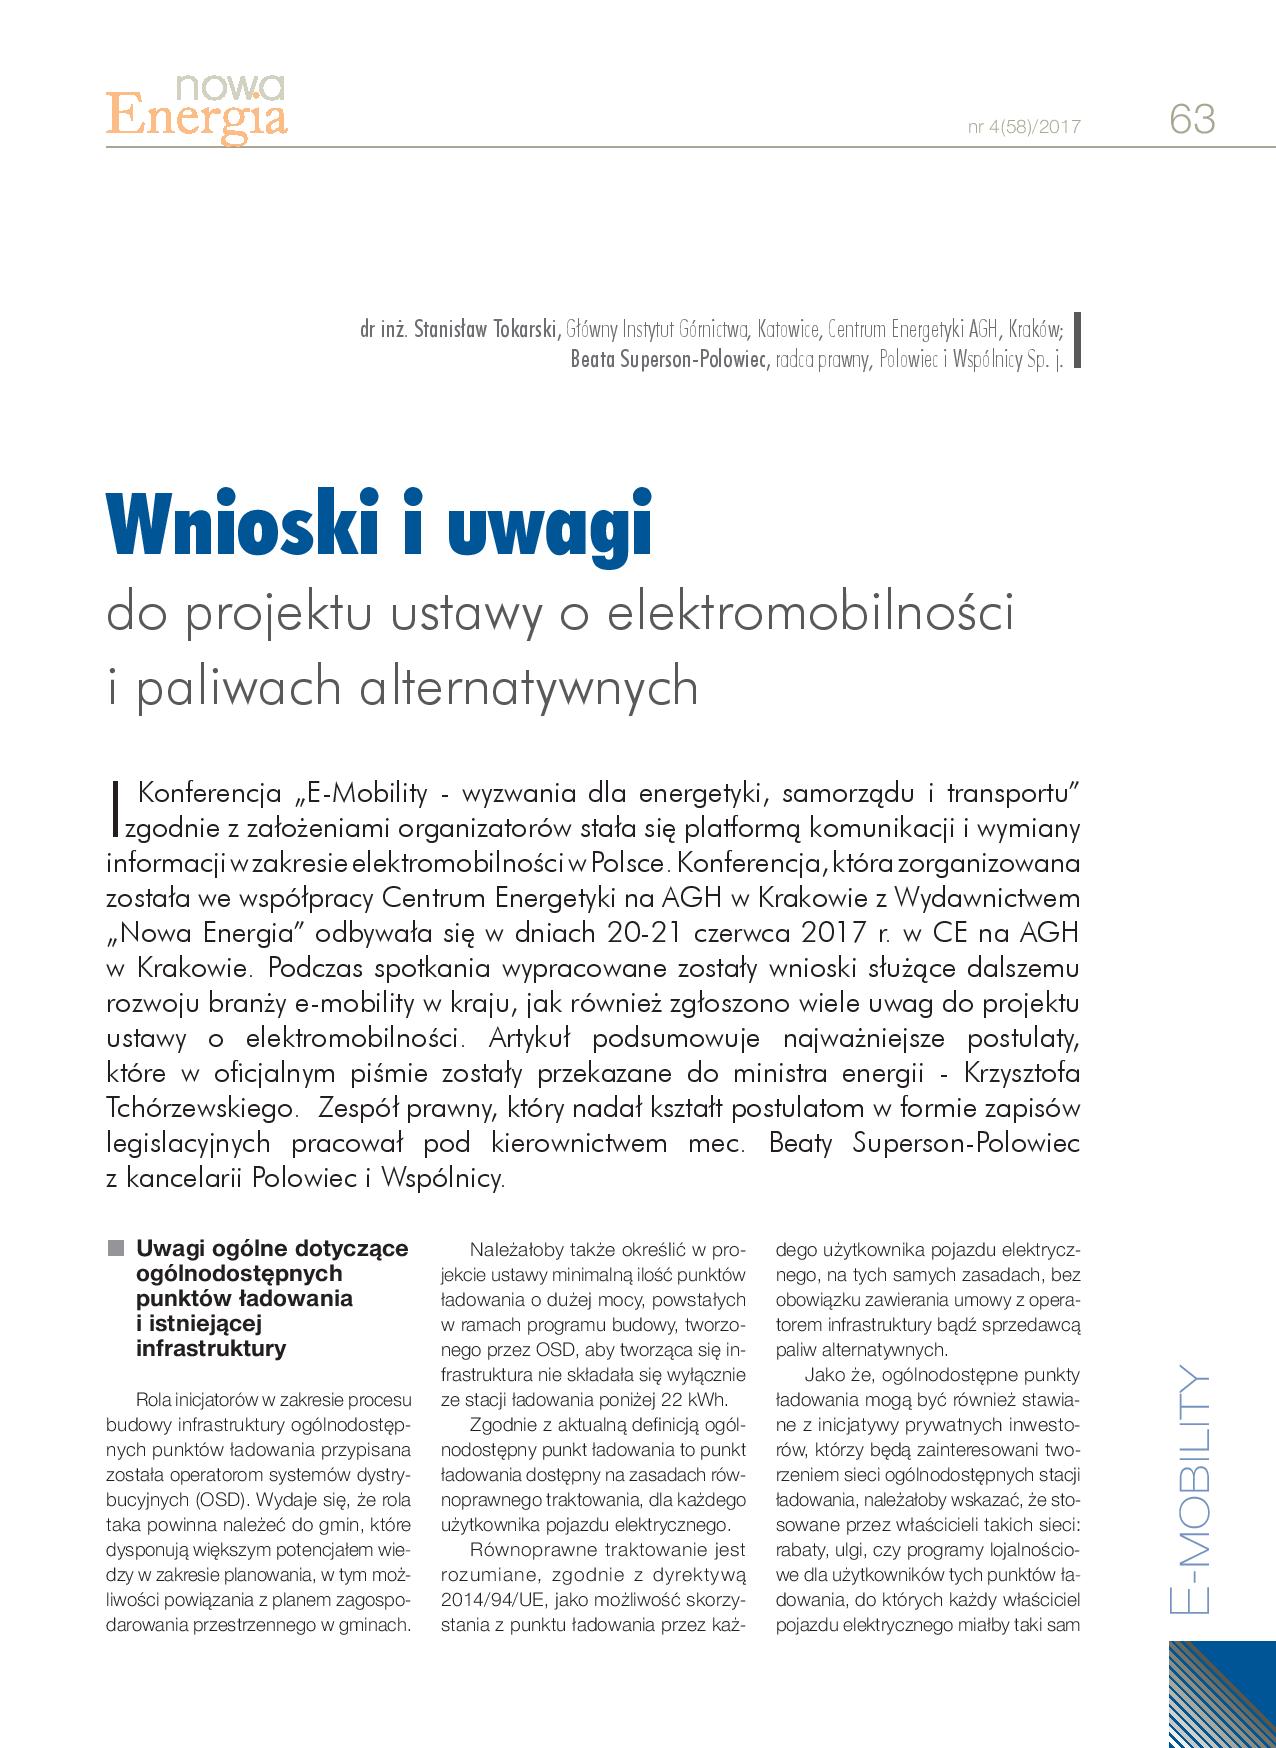 NOWA ENERGIA Tokarski Superson Polowiec page 001